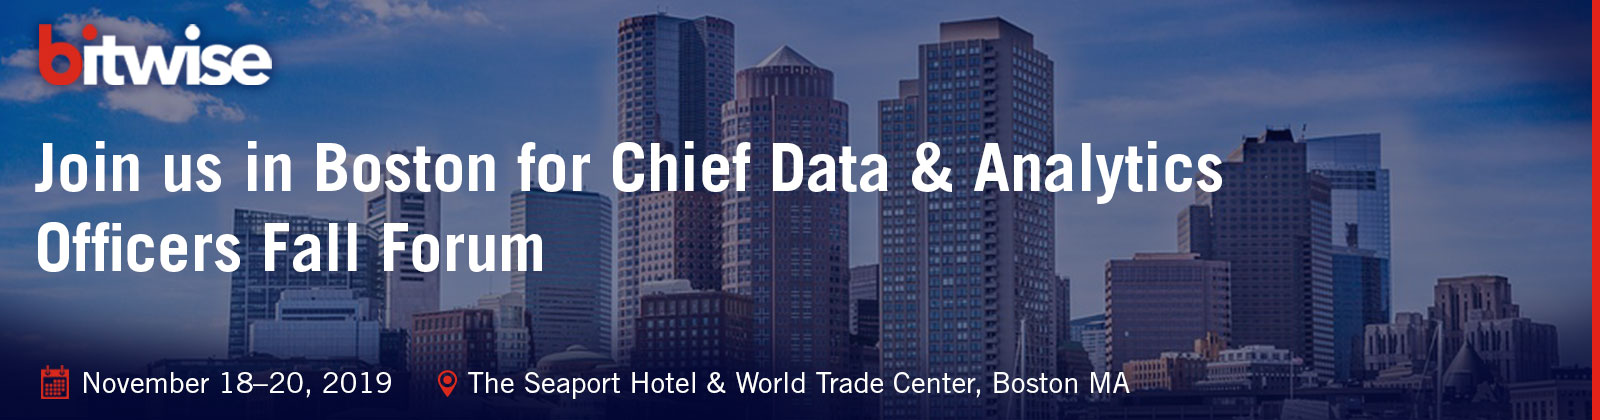 Chief Data & Analytics Officers Fall Forum, Boston | Bitwise